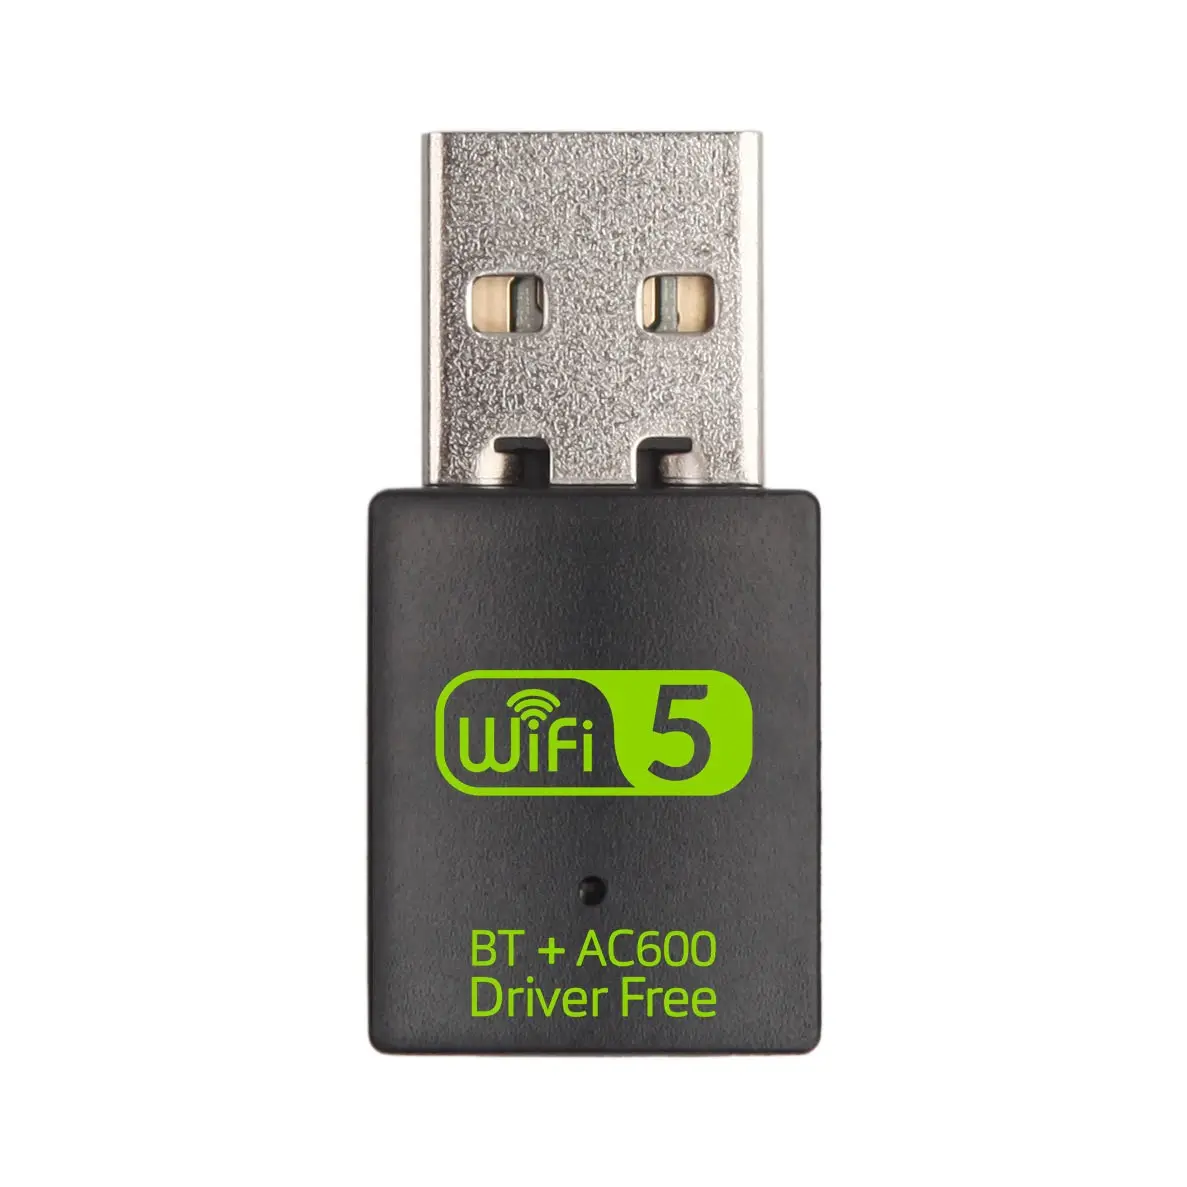 600Mbps USB scheda di rete Wireless RTL8811CU Dual Band wifi 5 dongle Driver free USB adattatore wifi ricevitore Mini Dongle Wifi